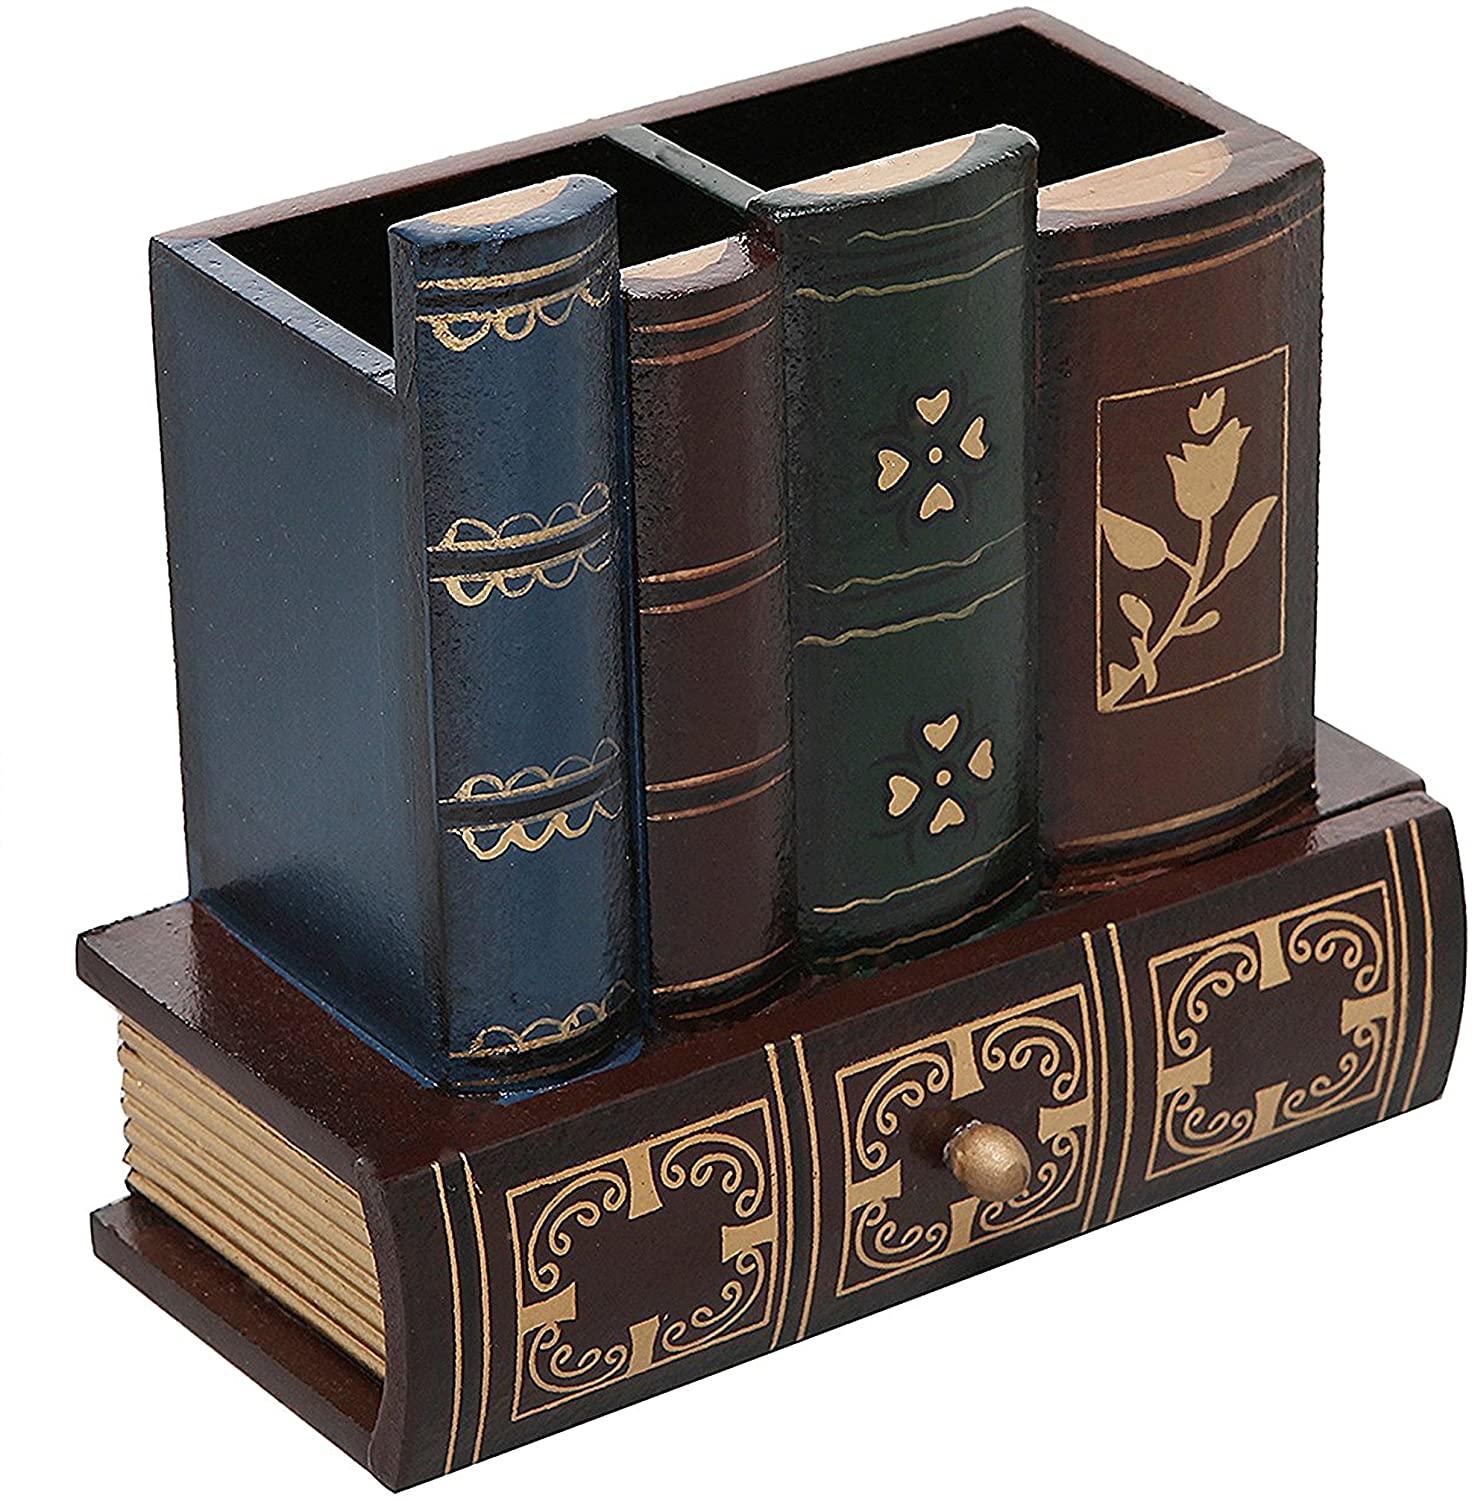 Organizador de madera de diseño de libro con cajón inferior